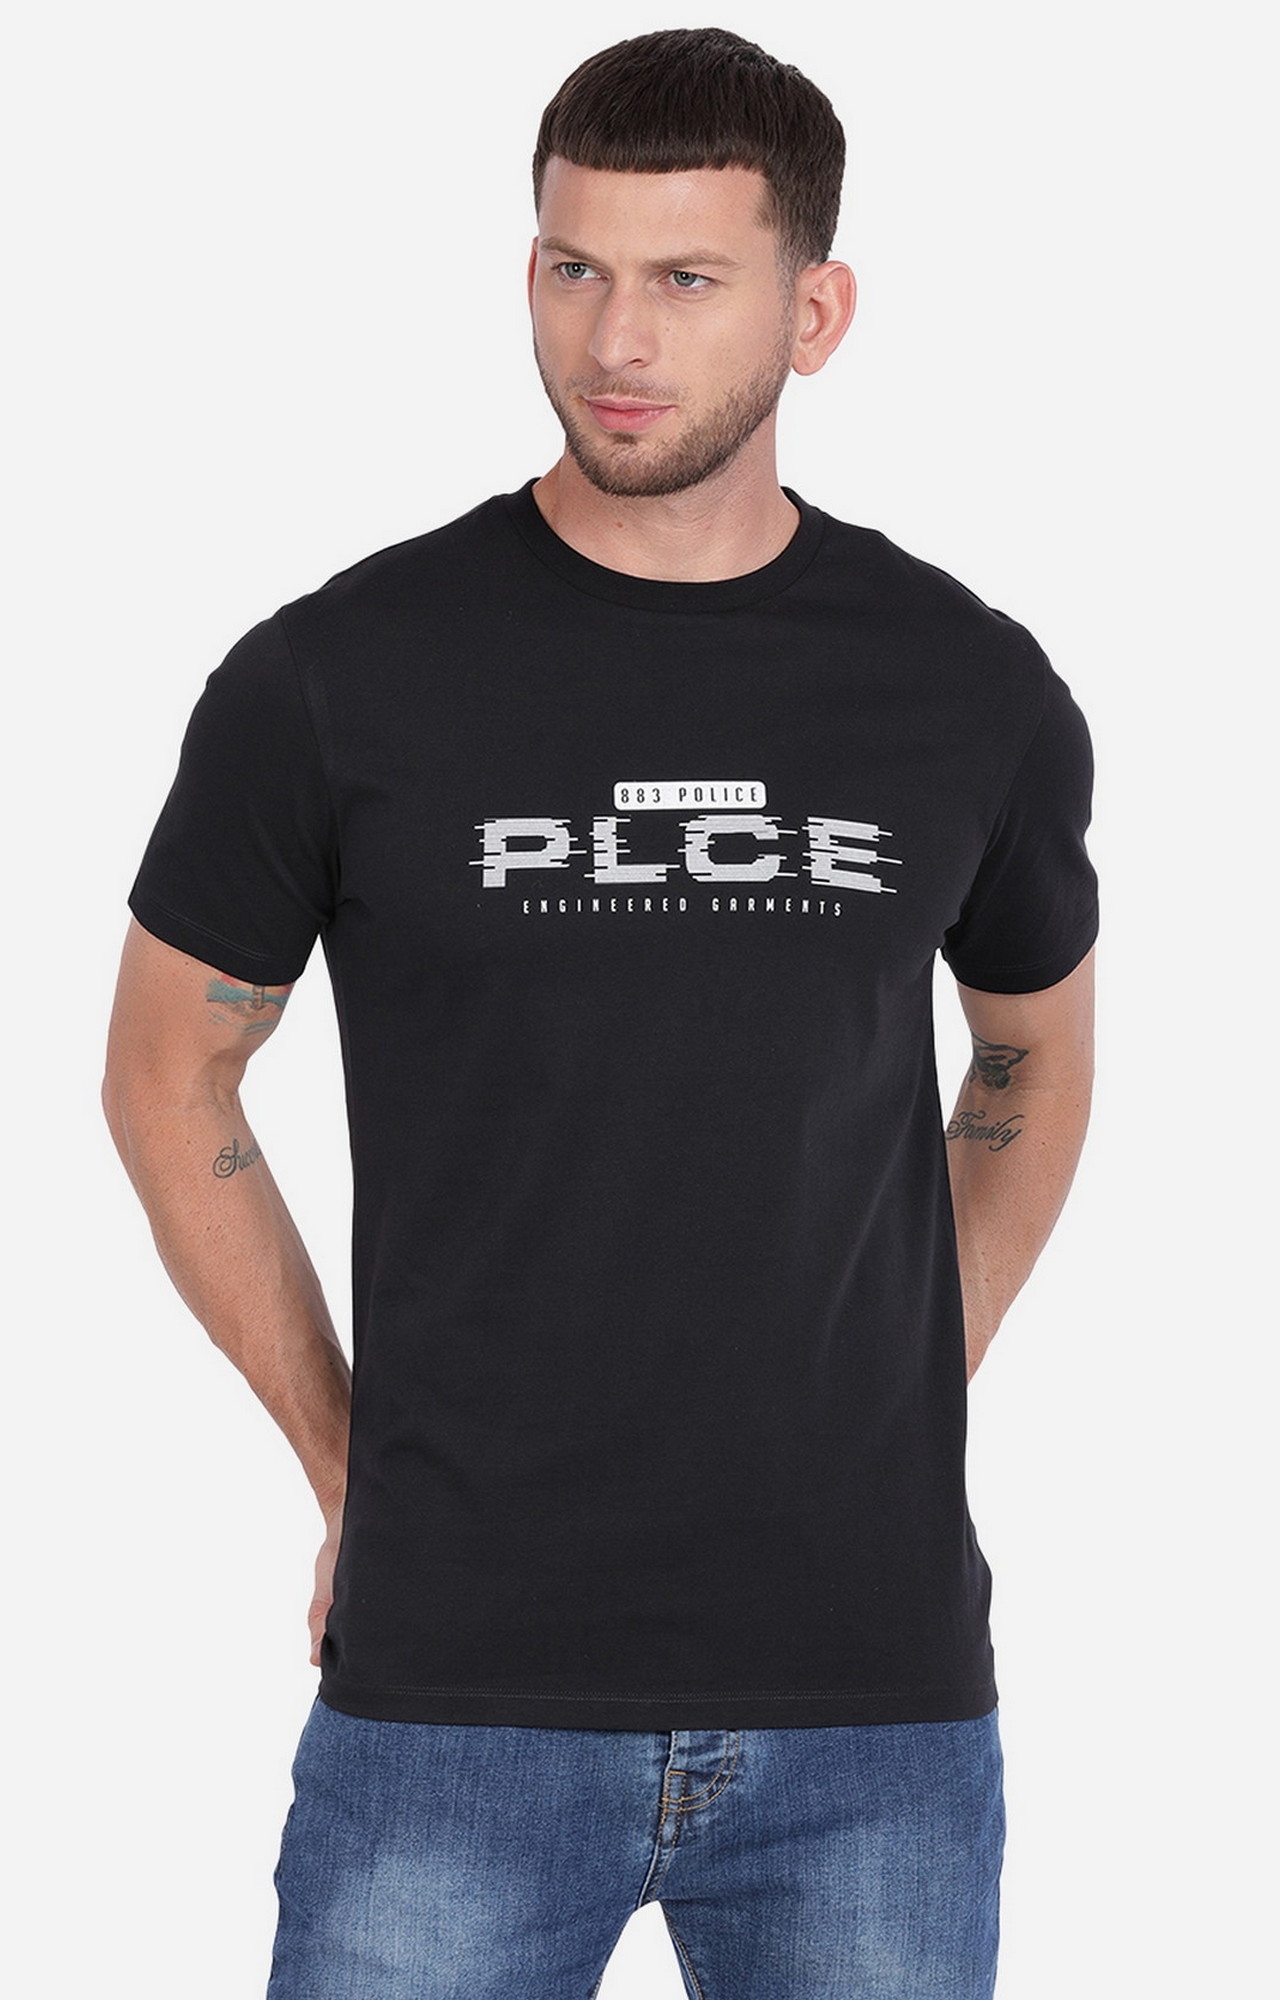 883 Police | Men's Black Cotton Typographic Printed T-Shirt 2